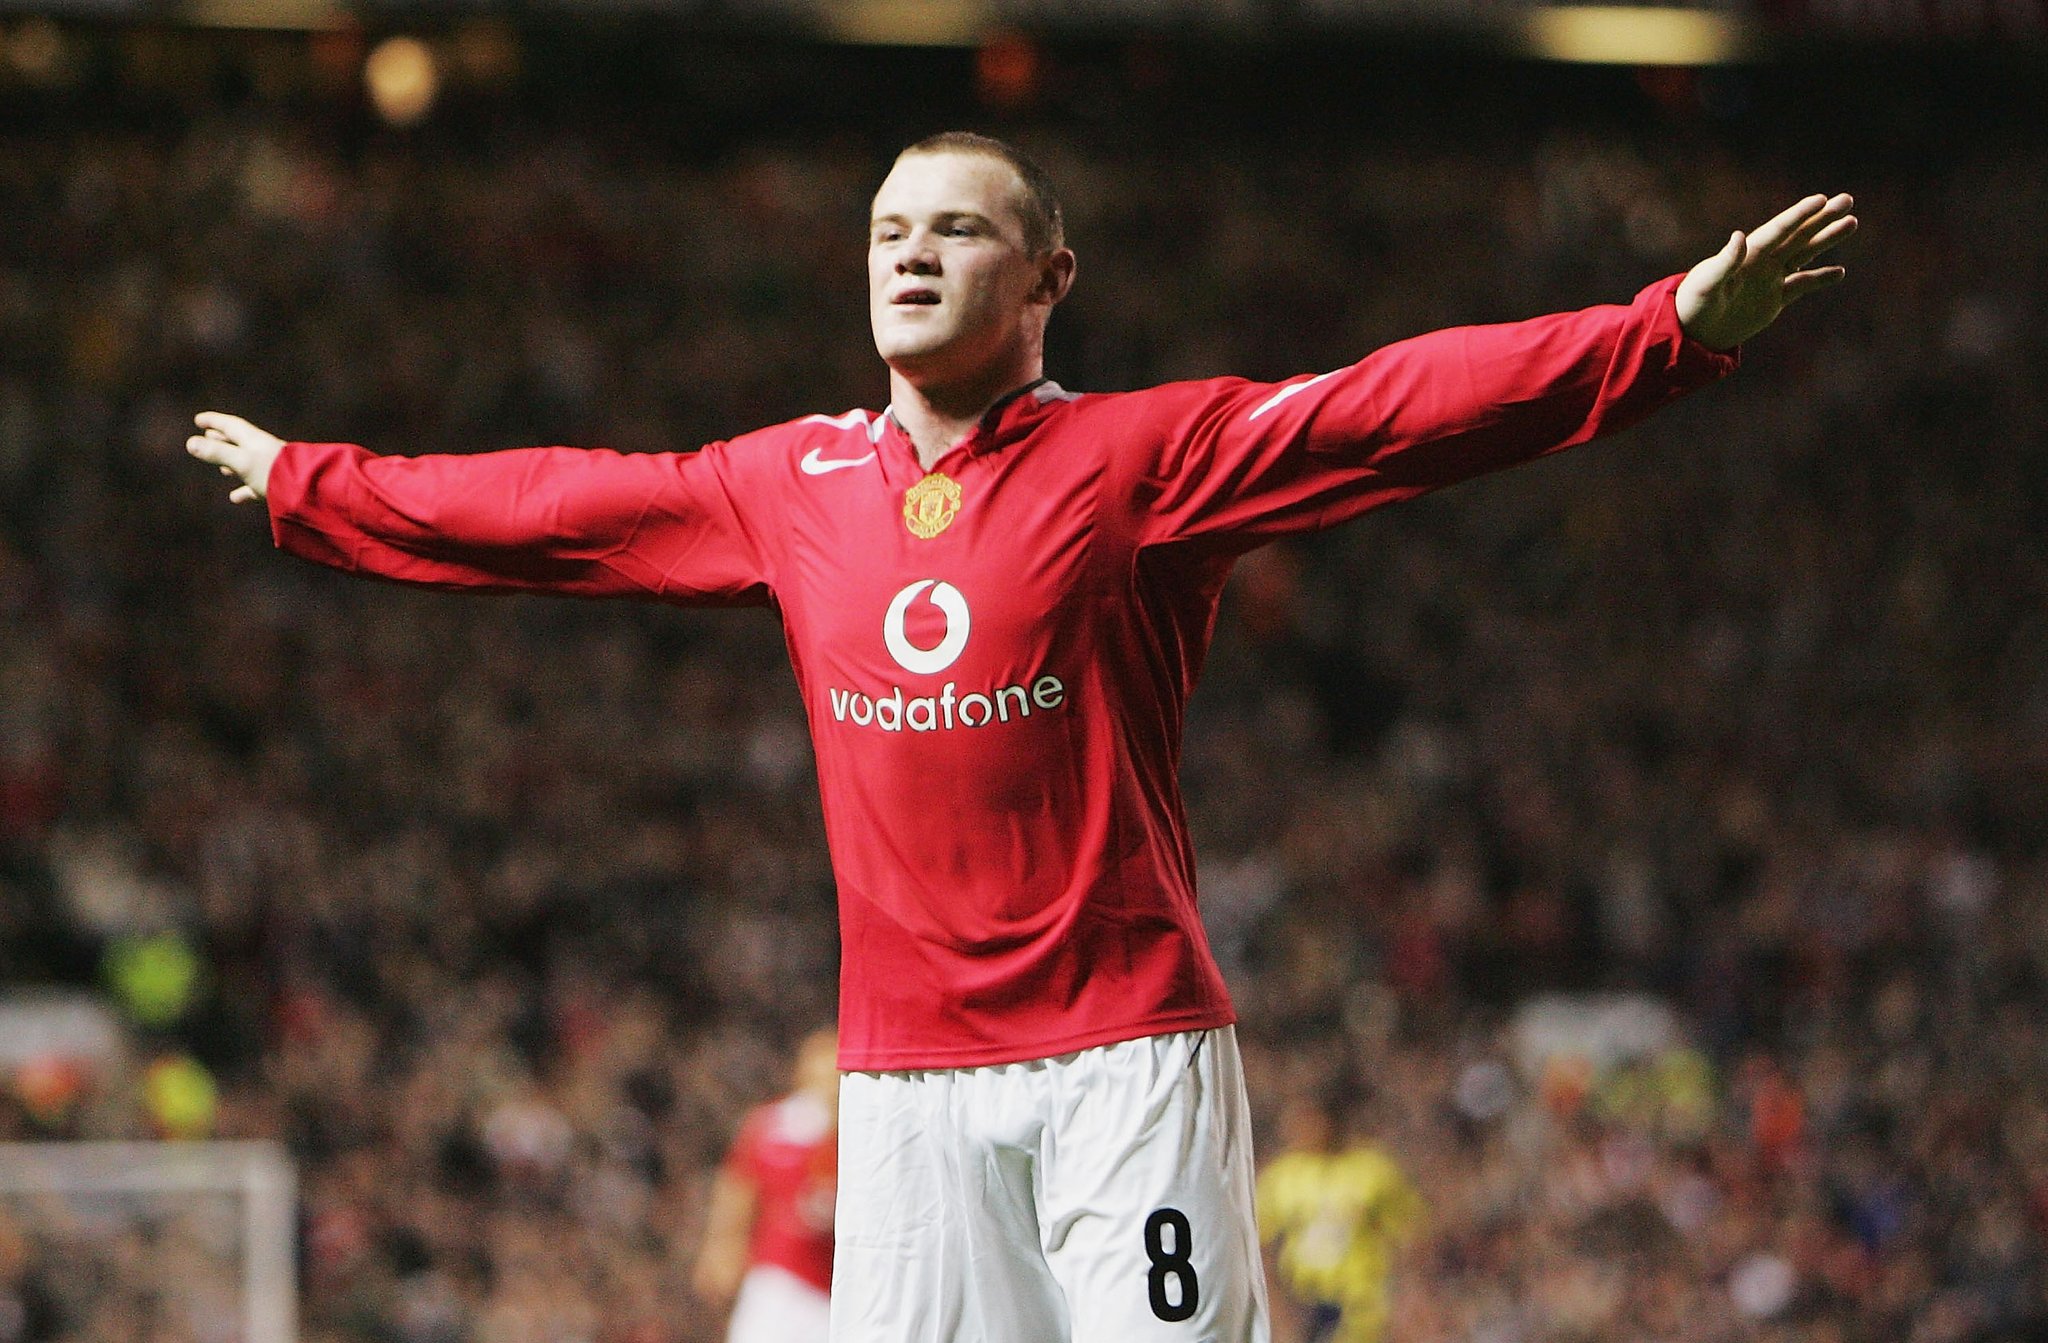 Happy 30th birthday, No10 Wayne Rooney! 